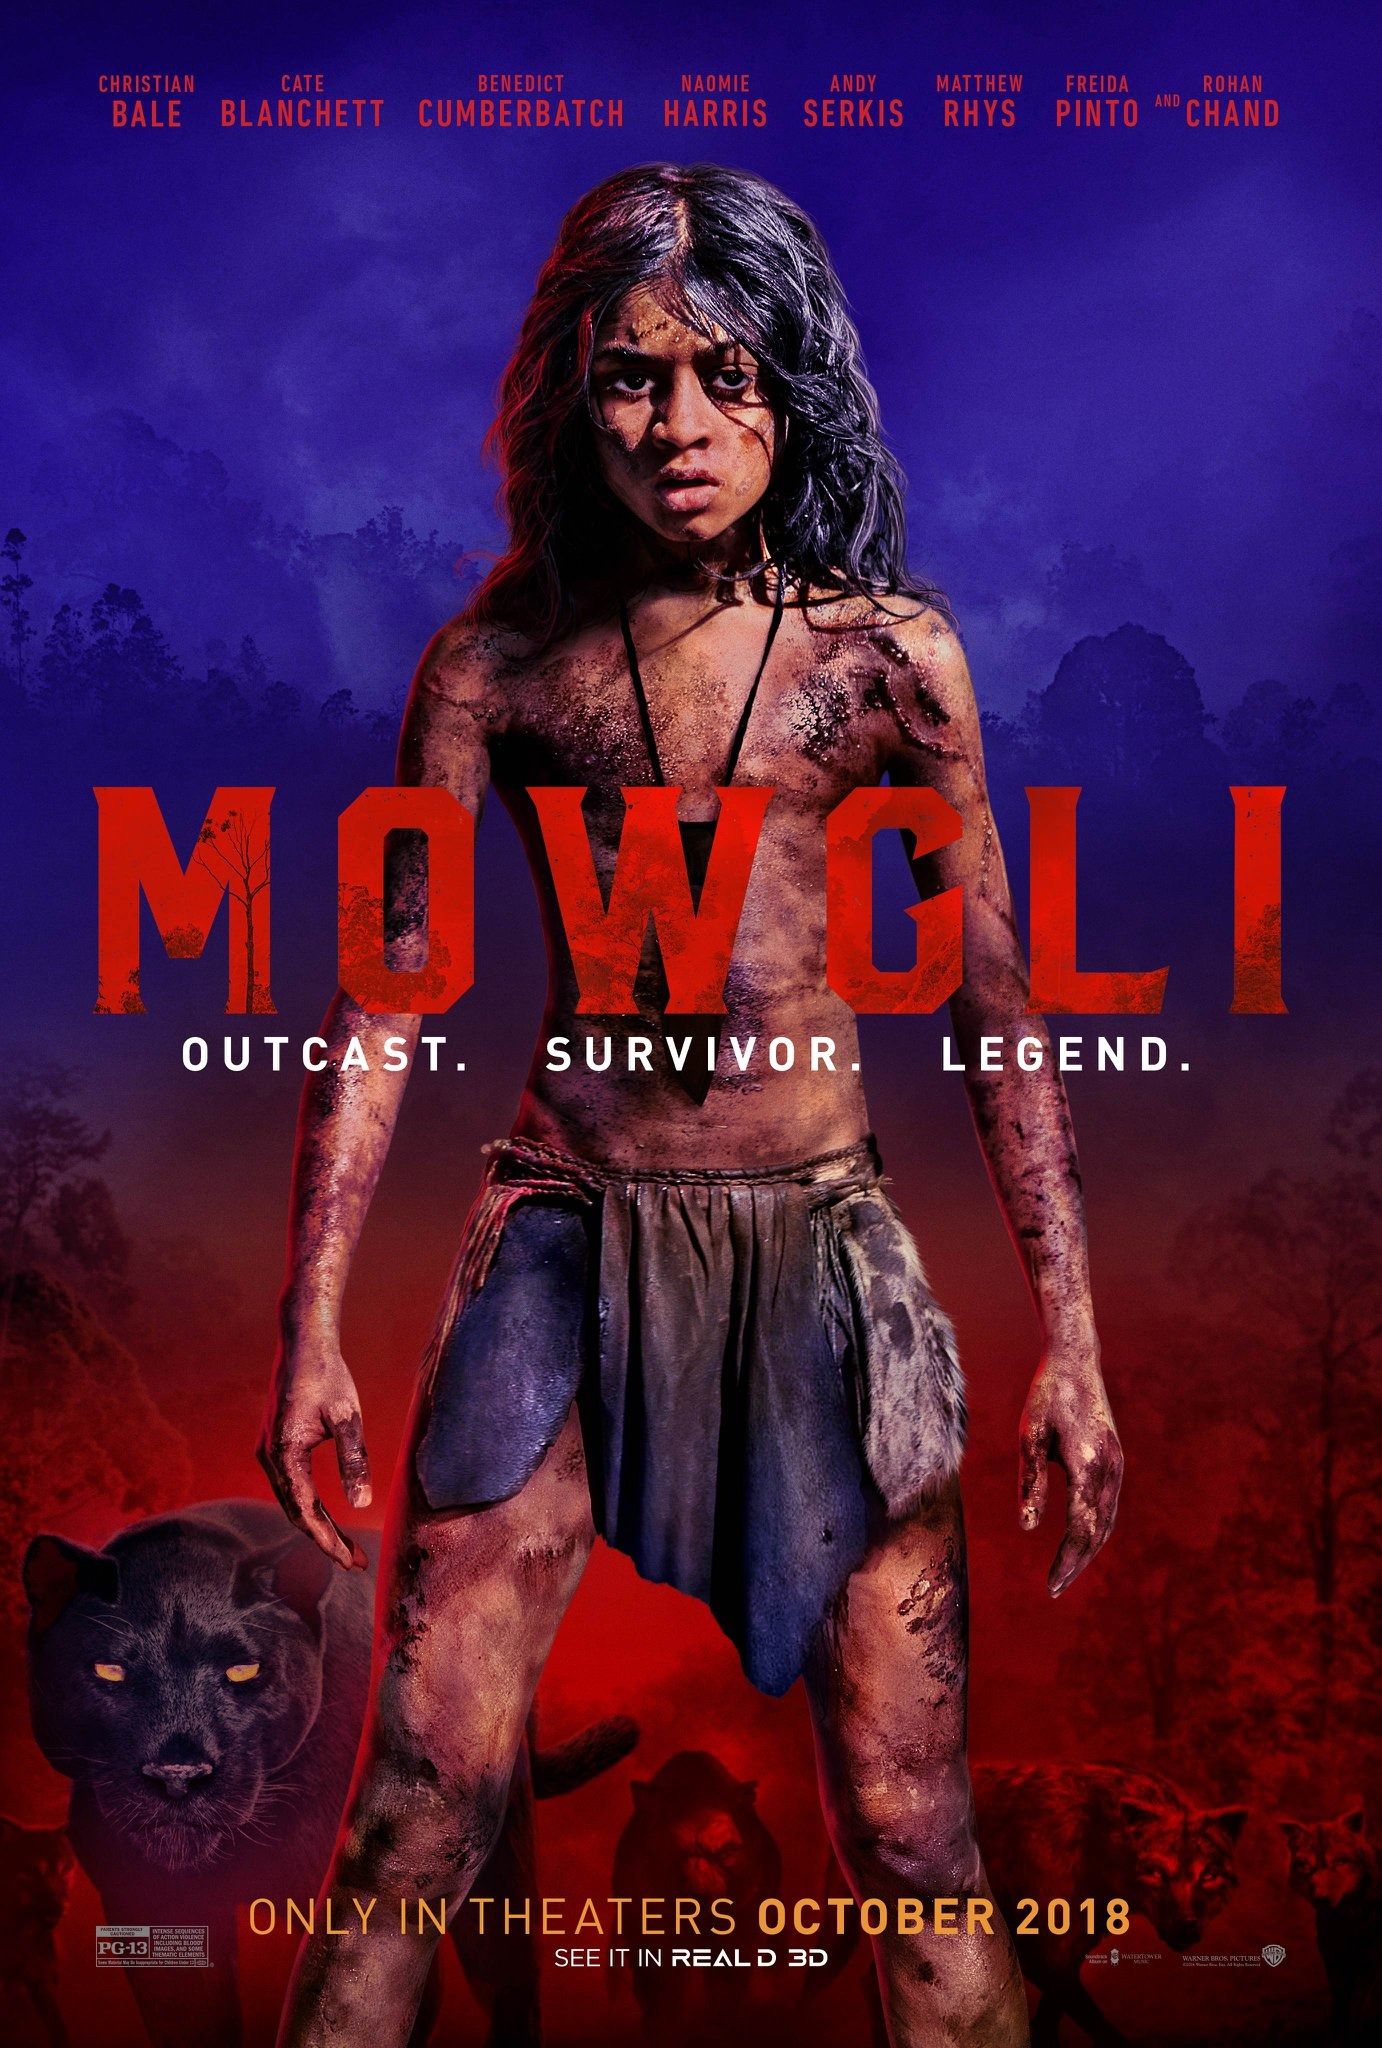 Mowgli movie Poster 2018